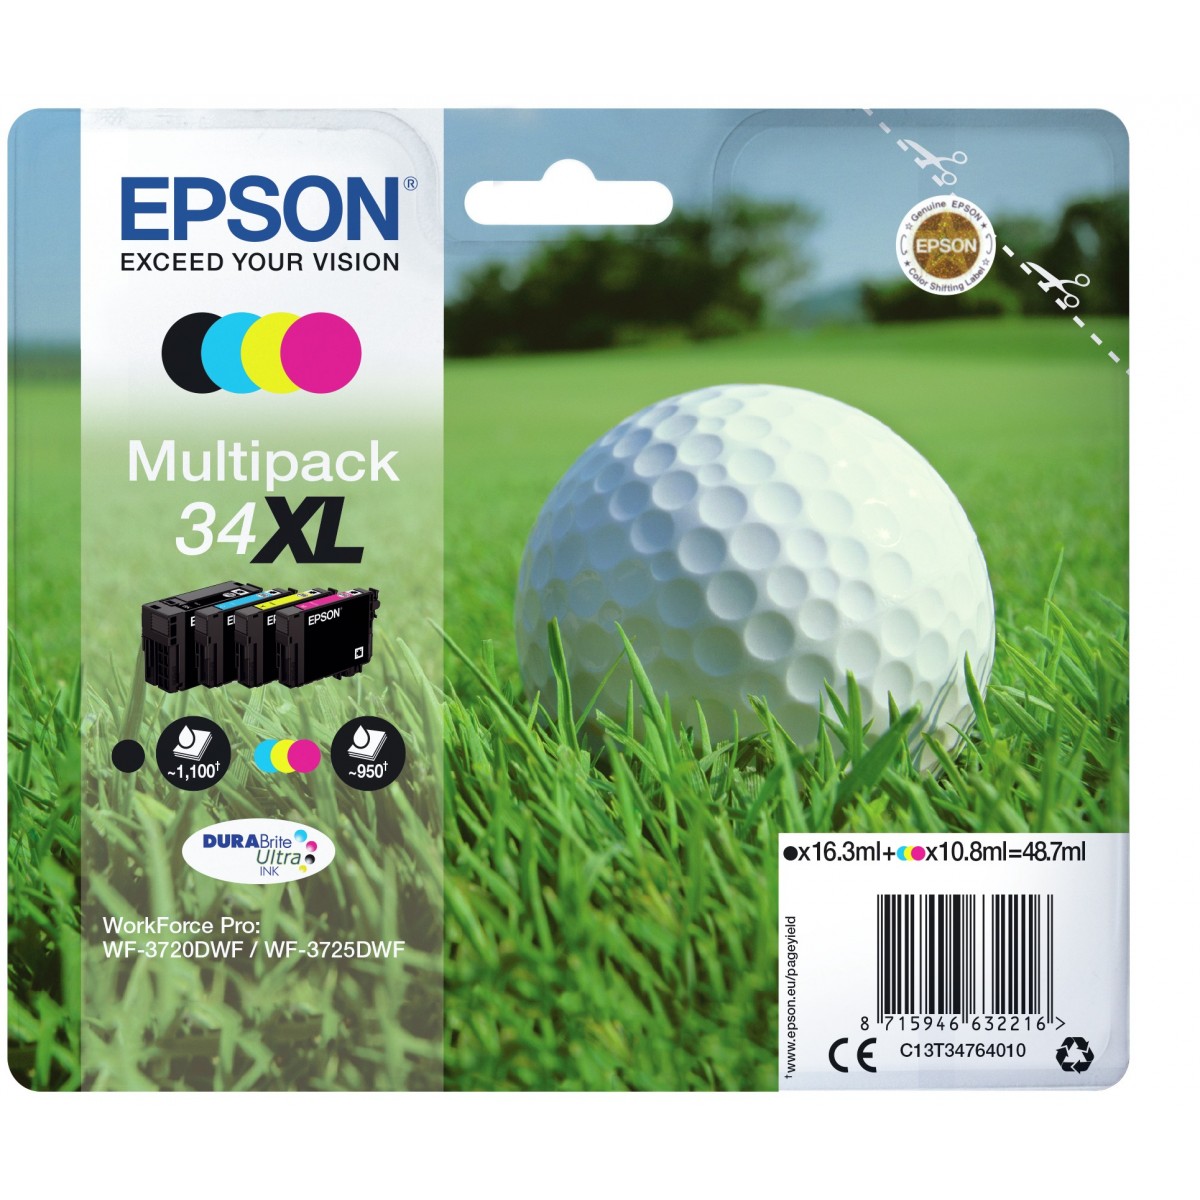 Epson Golf ball Multipack 4-colours 34XL DURABrite Ultra Ink - Original - Pigment-based ink - Black - Cyan - Magenta - Yellow - 